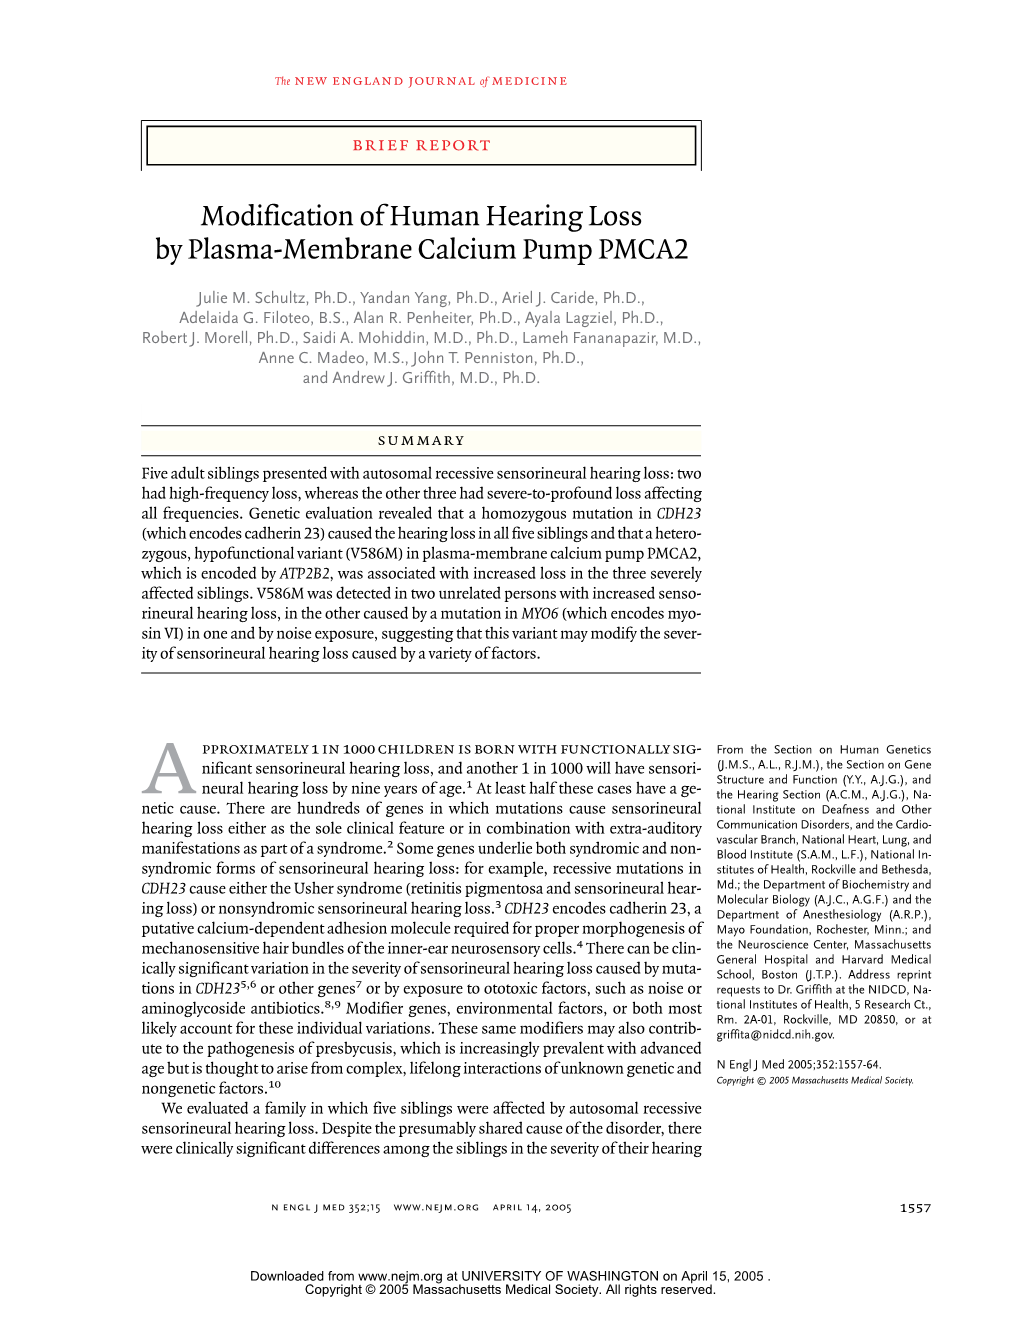 Modification of Human Hearing Loss by Plasma-Membrane Calcium Pump PMCA2